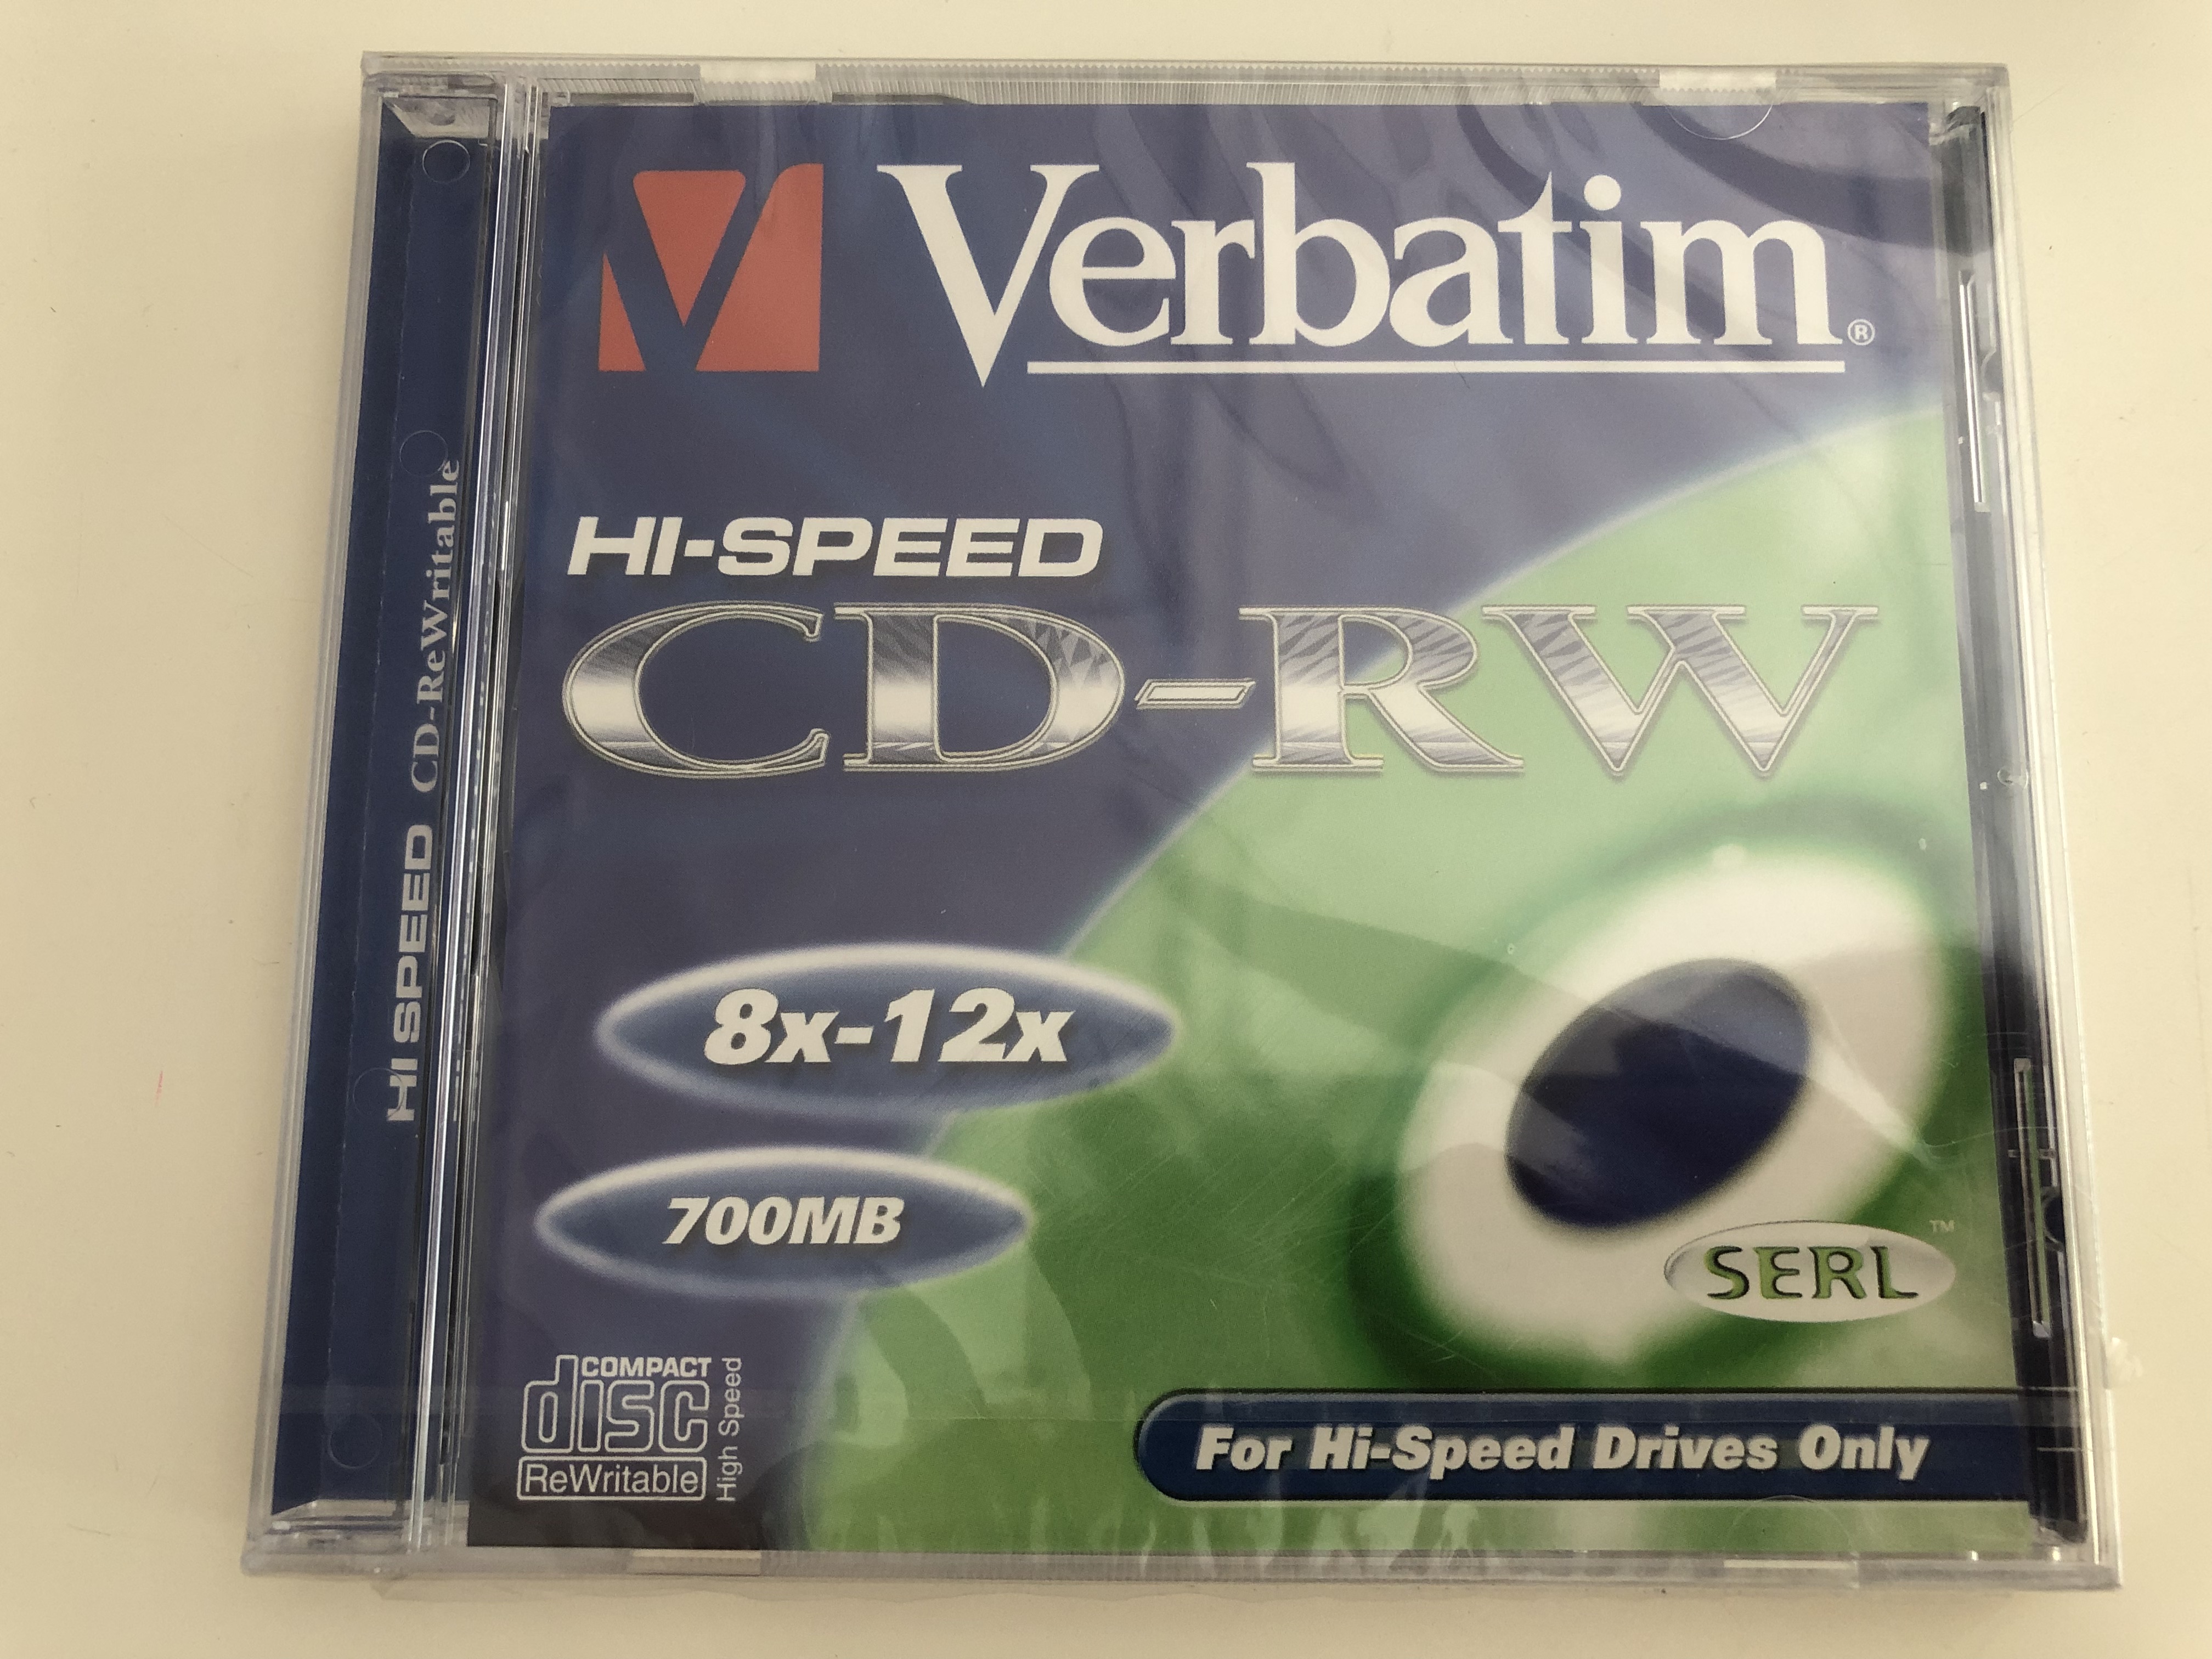 hi-speed-cd-rw-verbatim-blank-rewritable-cd-8x-12x-700-mb-for-hi-speed-drives-only-1-.jpg